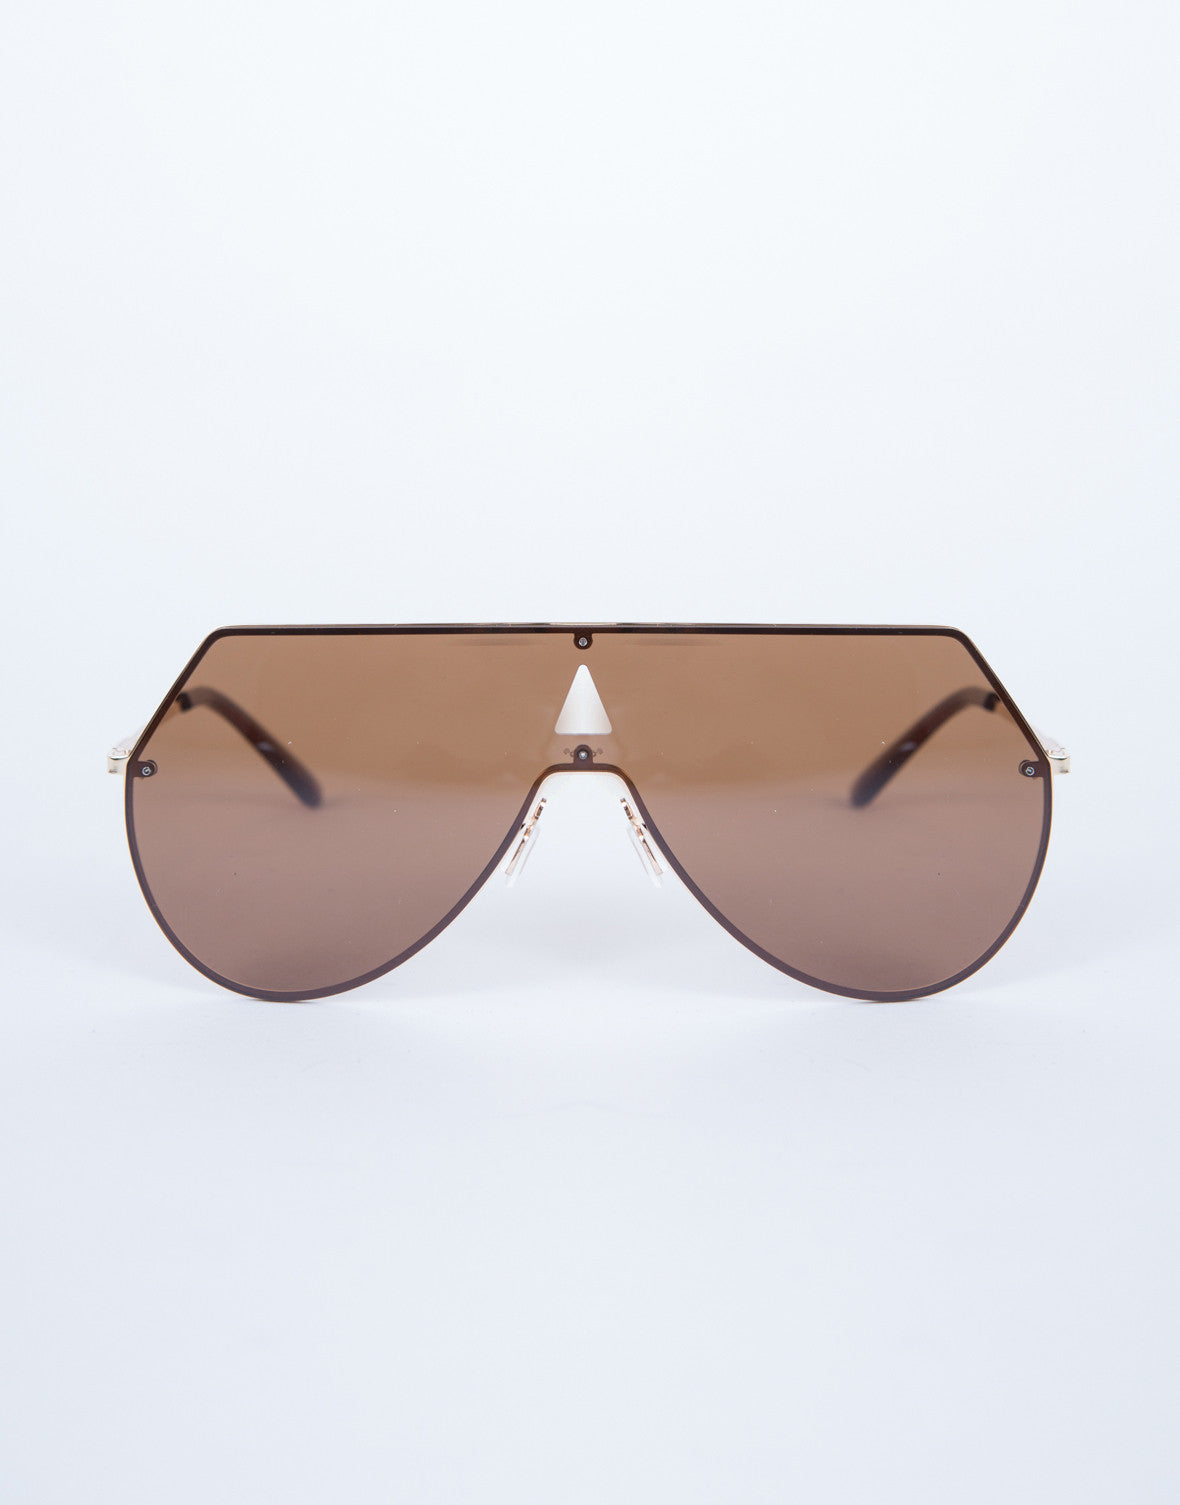 Futuristic Oversized Sunnies - Mirrored Sunglasses - Frameless Sunnies ...